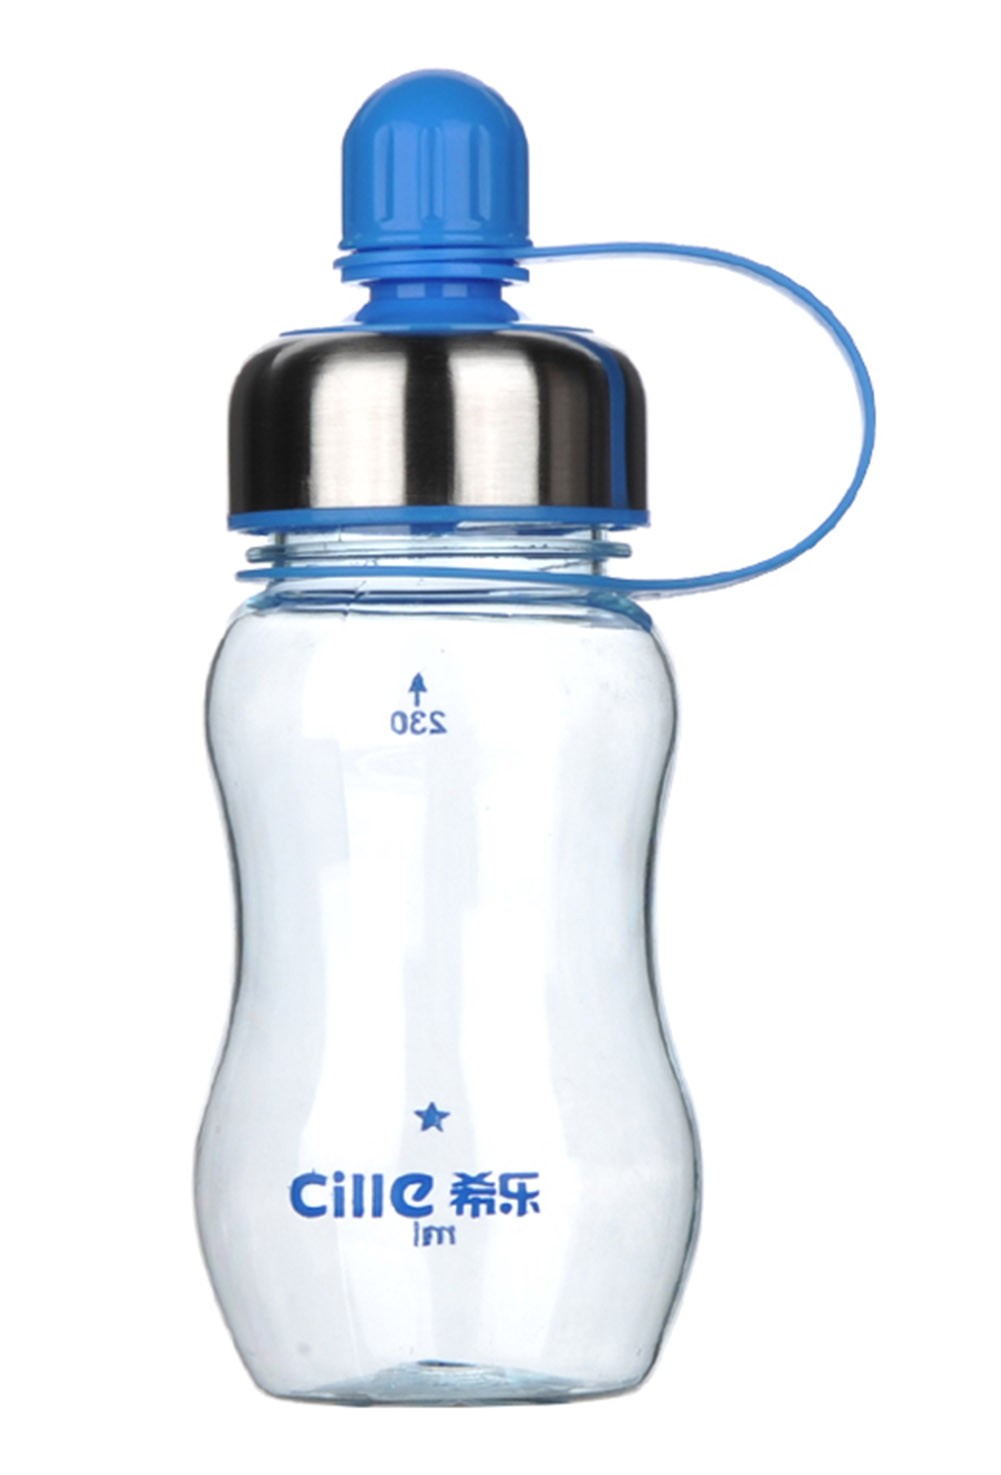 230ML/8 OZ Leakproof Outdoor Outdoor Water Bottle Portable Sport Water Bottle with Lid Blue #1